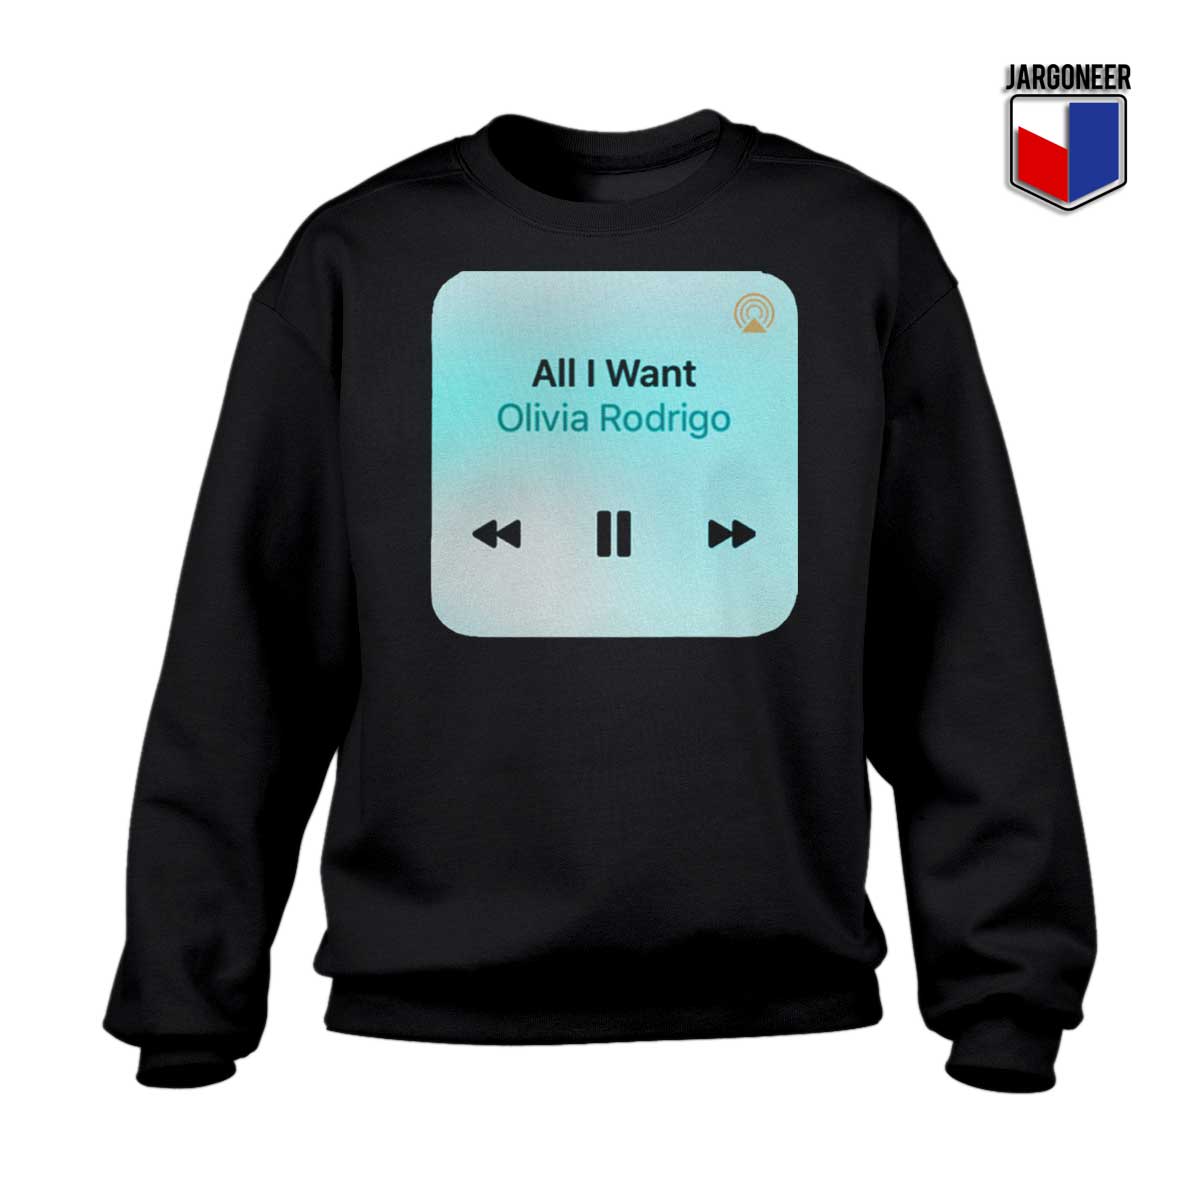 All I Want By Olivia Rodrigo Sweatshirt - Shop Unique Graphic Cool Shirt Designs